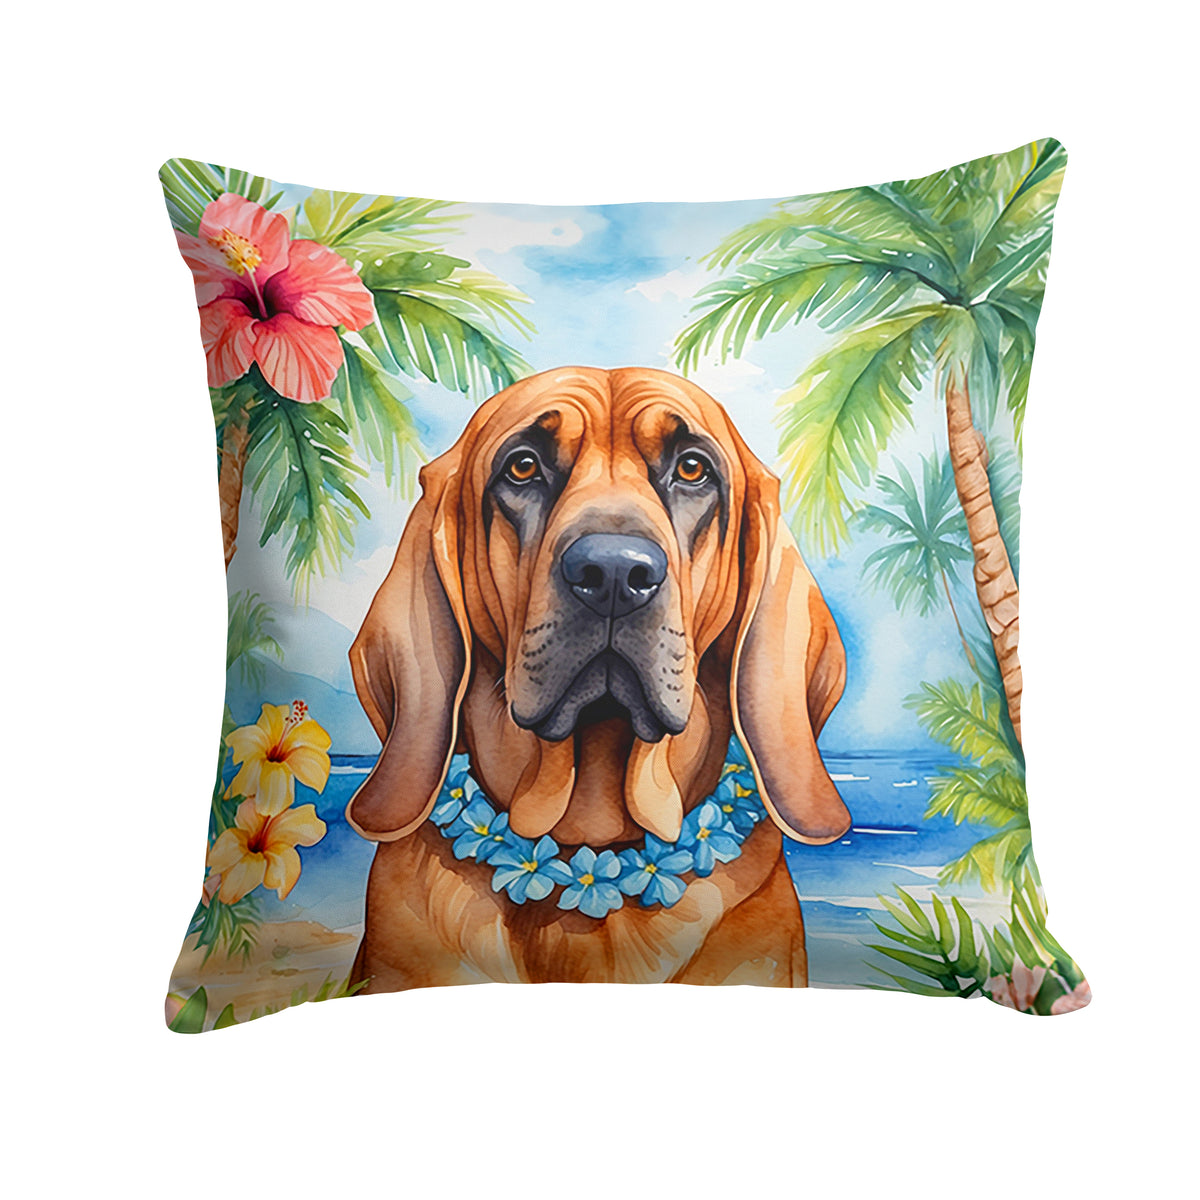 Buy this Bloodhound Luau Throw Pillow